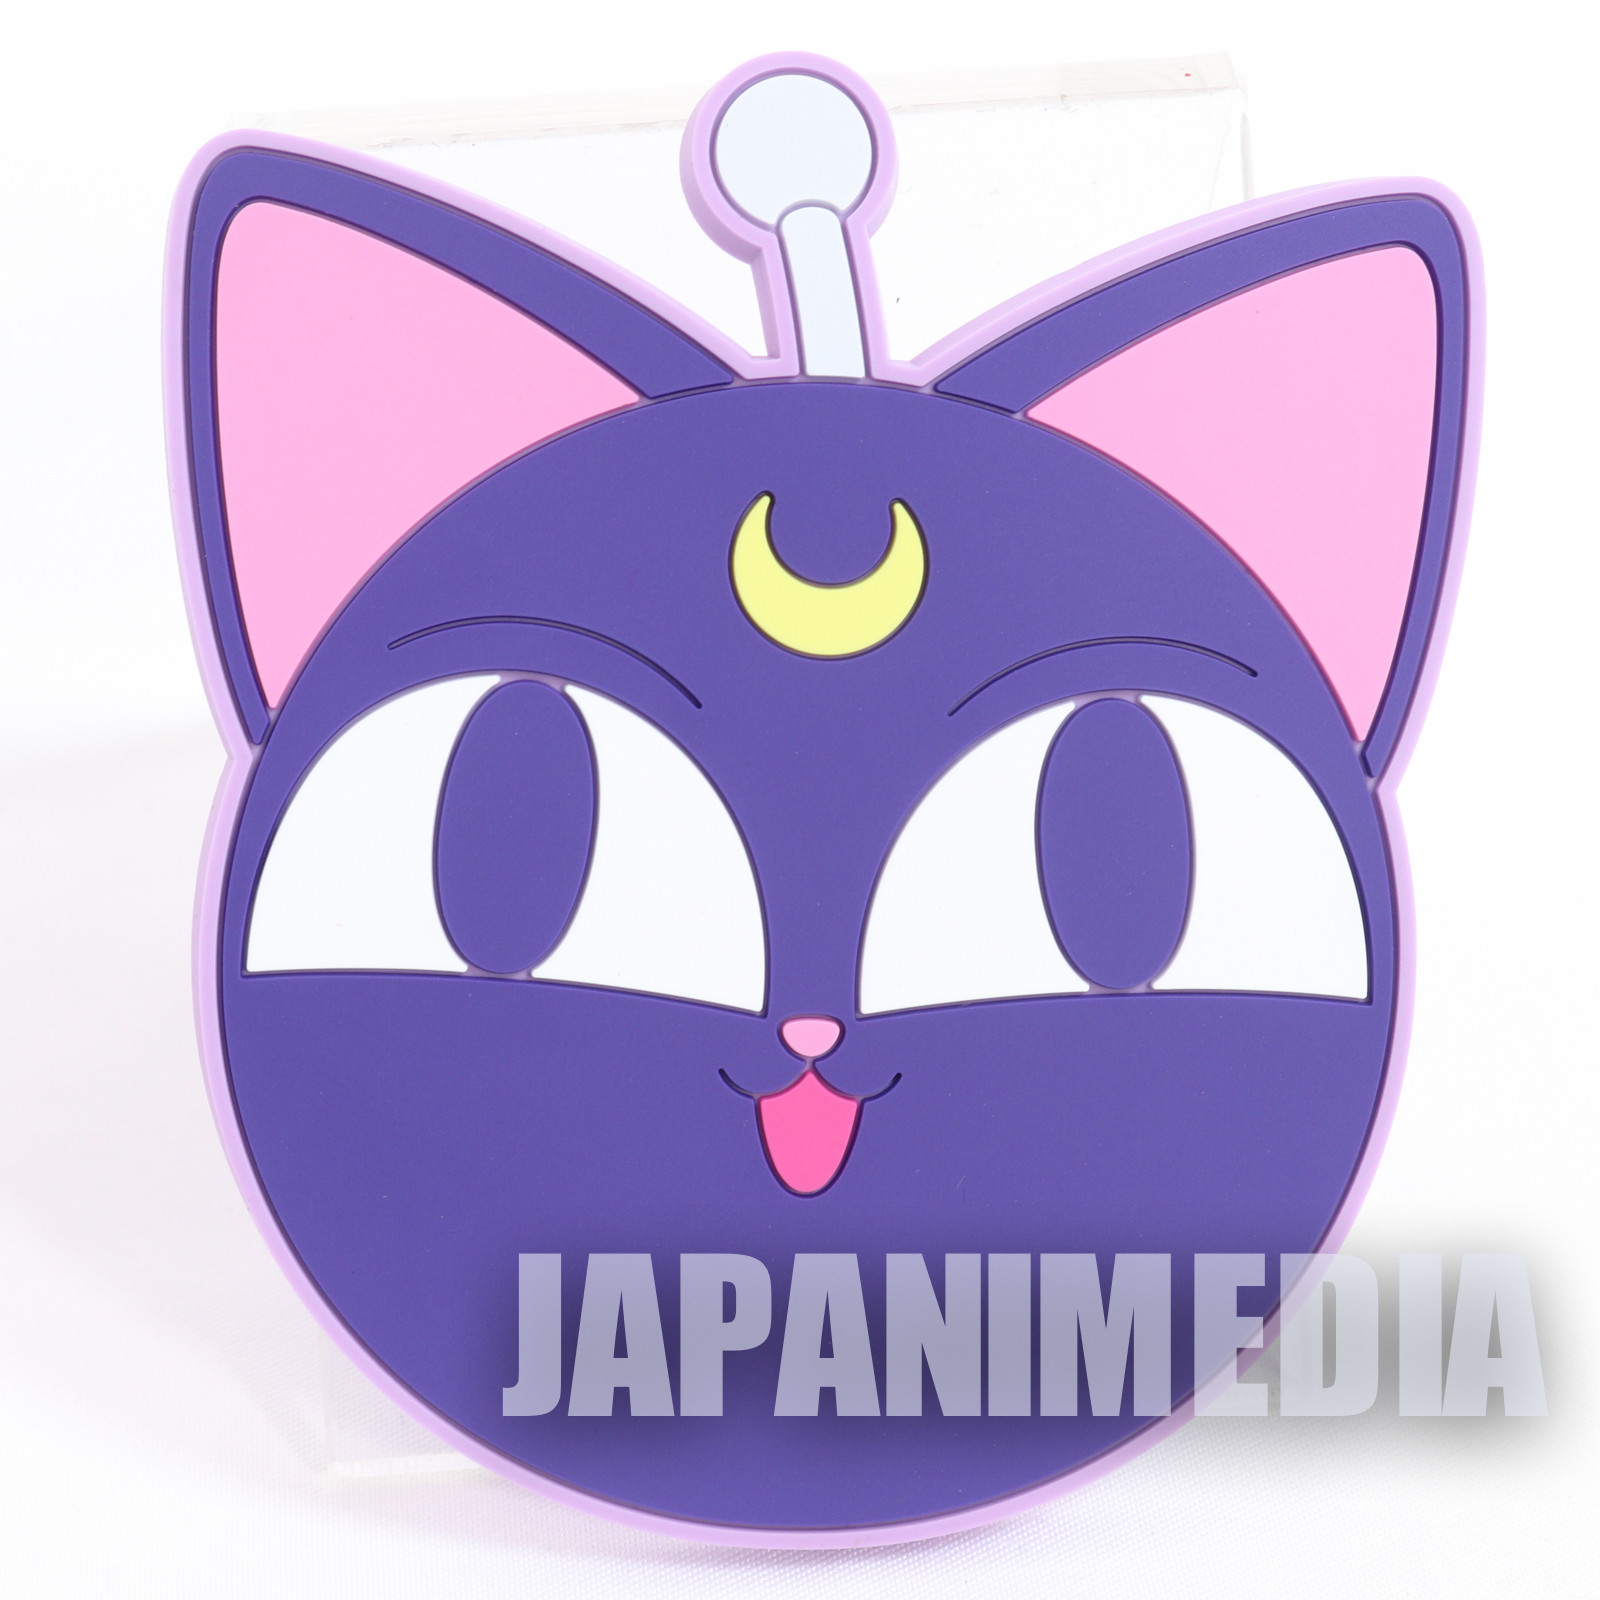 Sailor Moon Small Size Rubber Coaster 2.5" #2 JAPAN ANIME